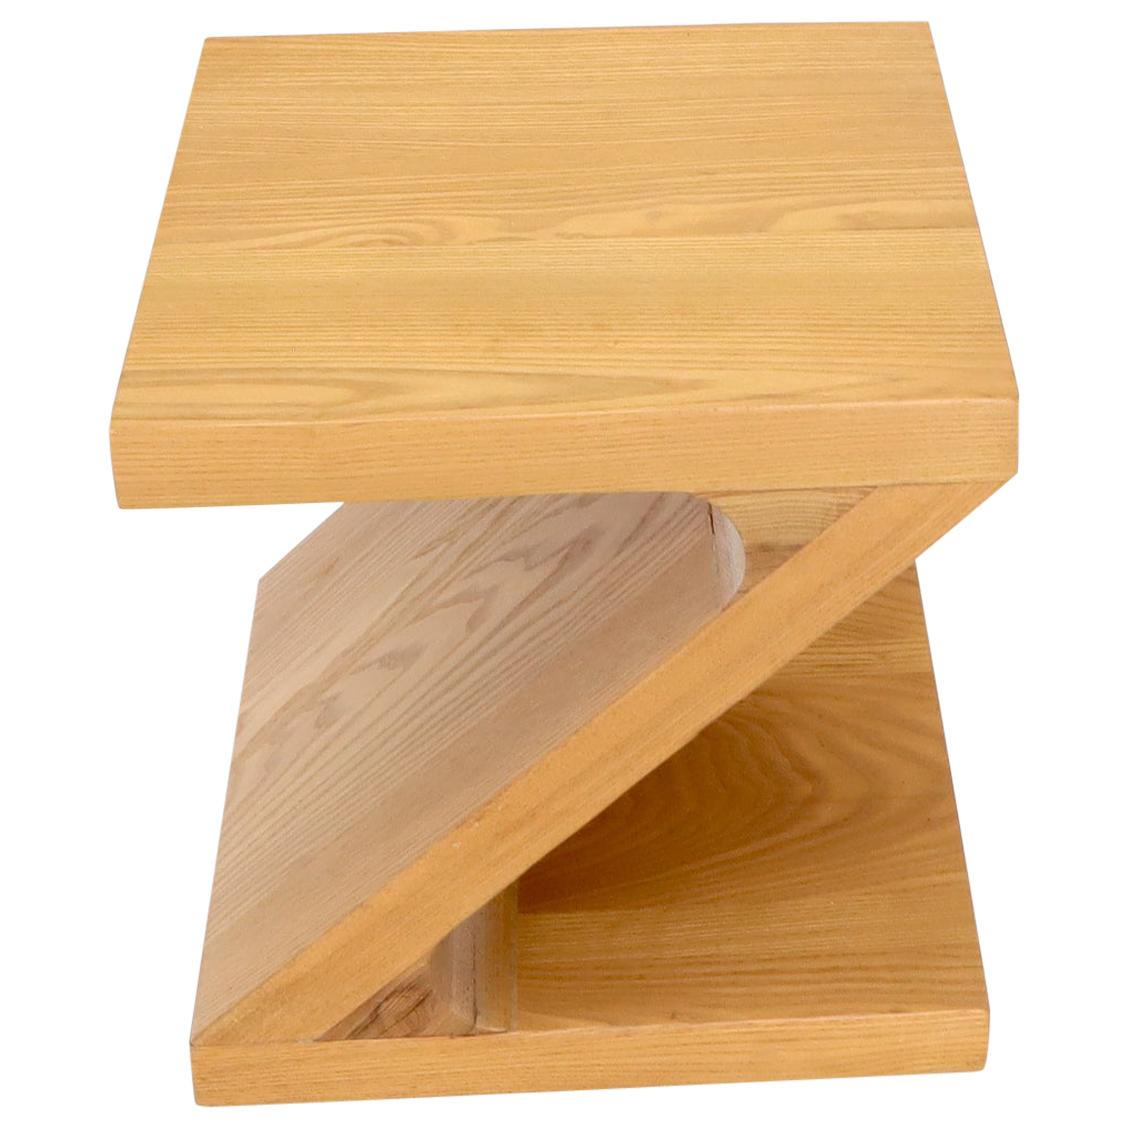 Solid Oak Z-Shape End Side Table Stand